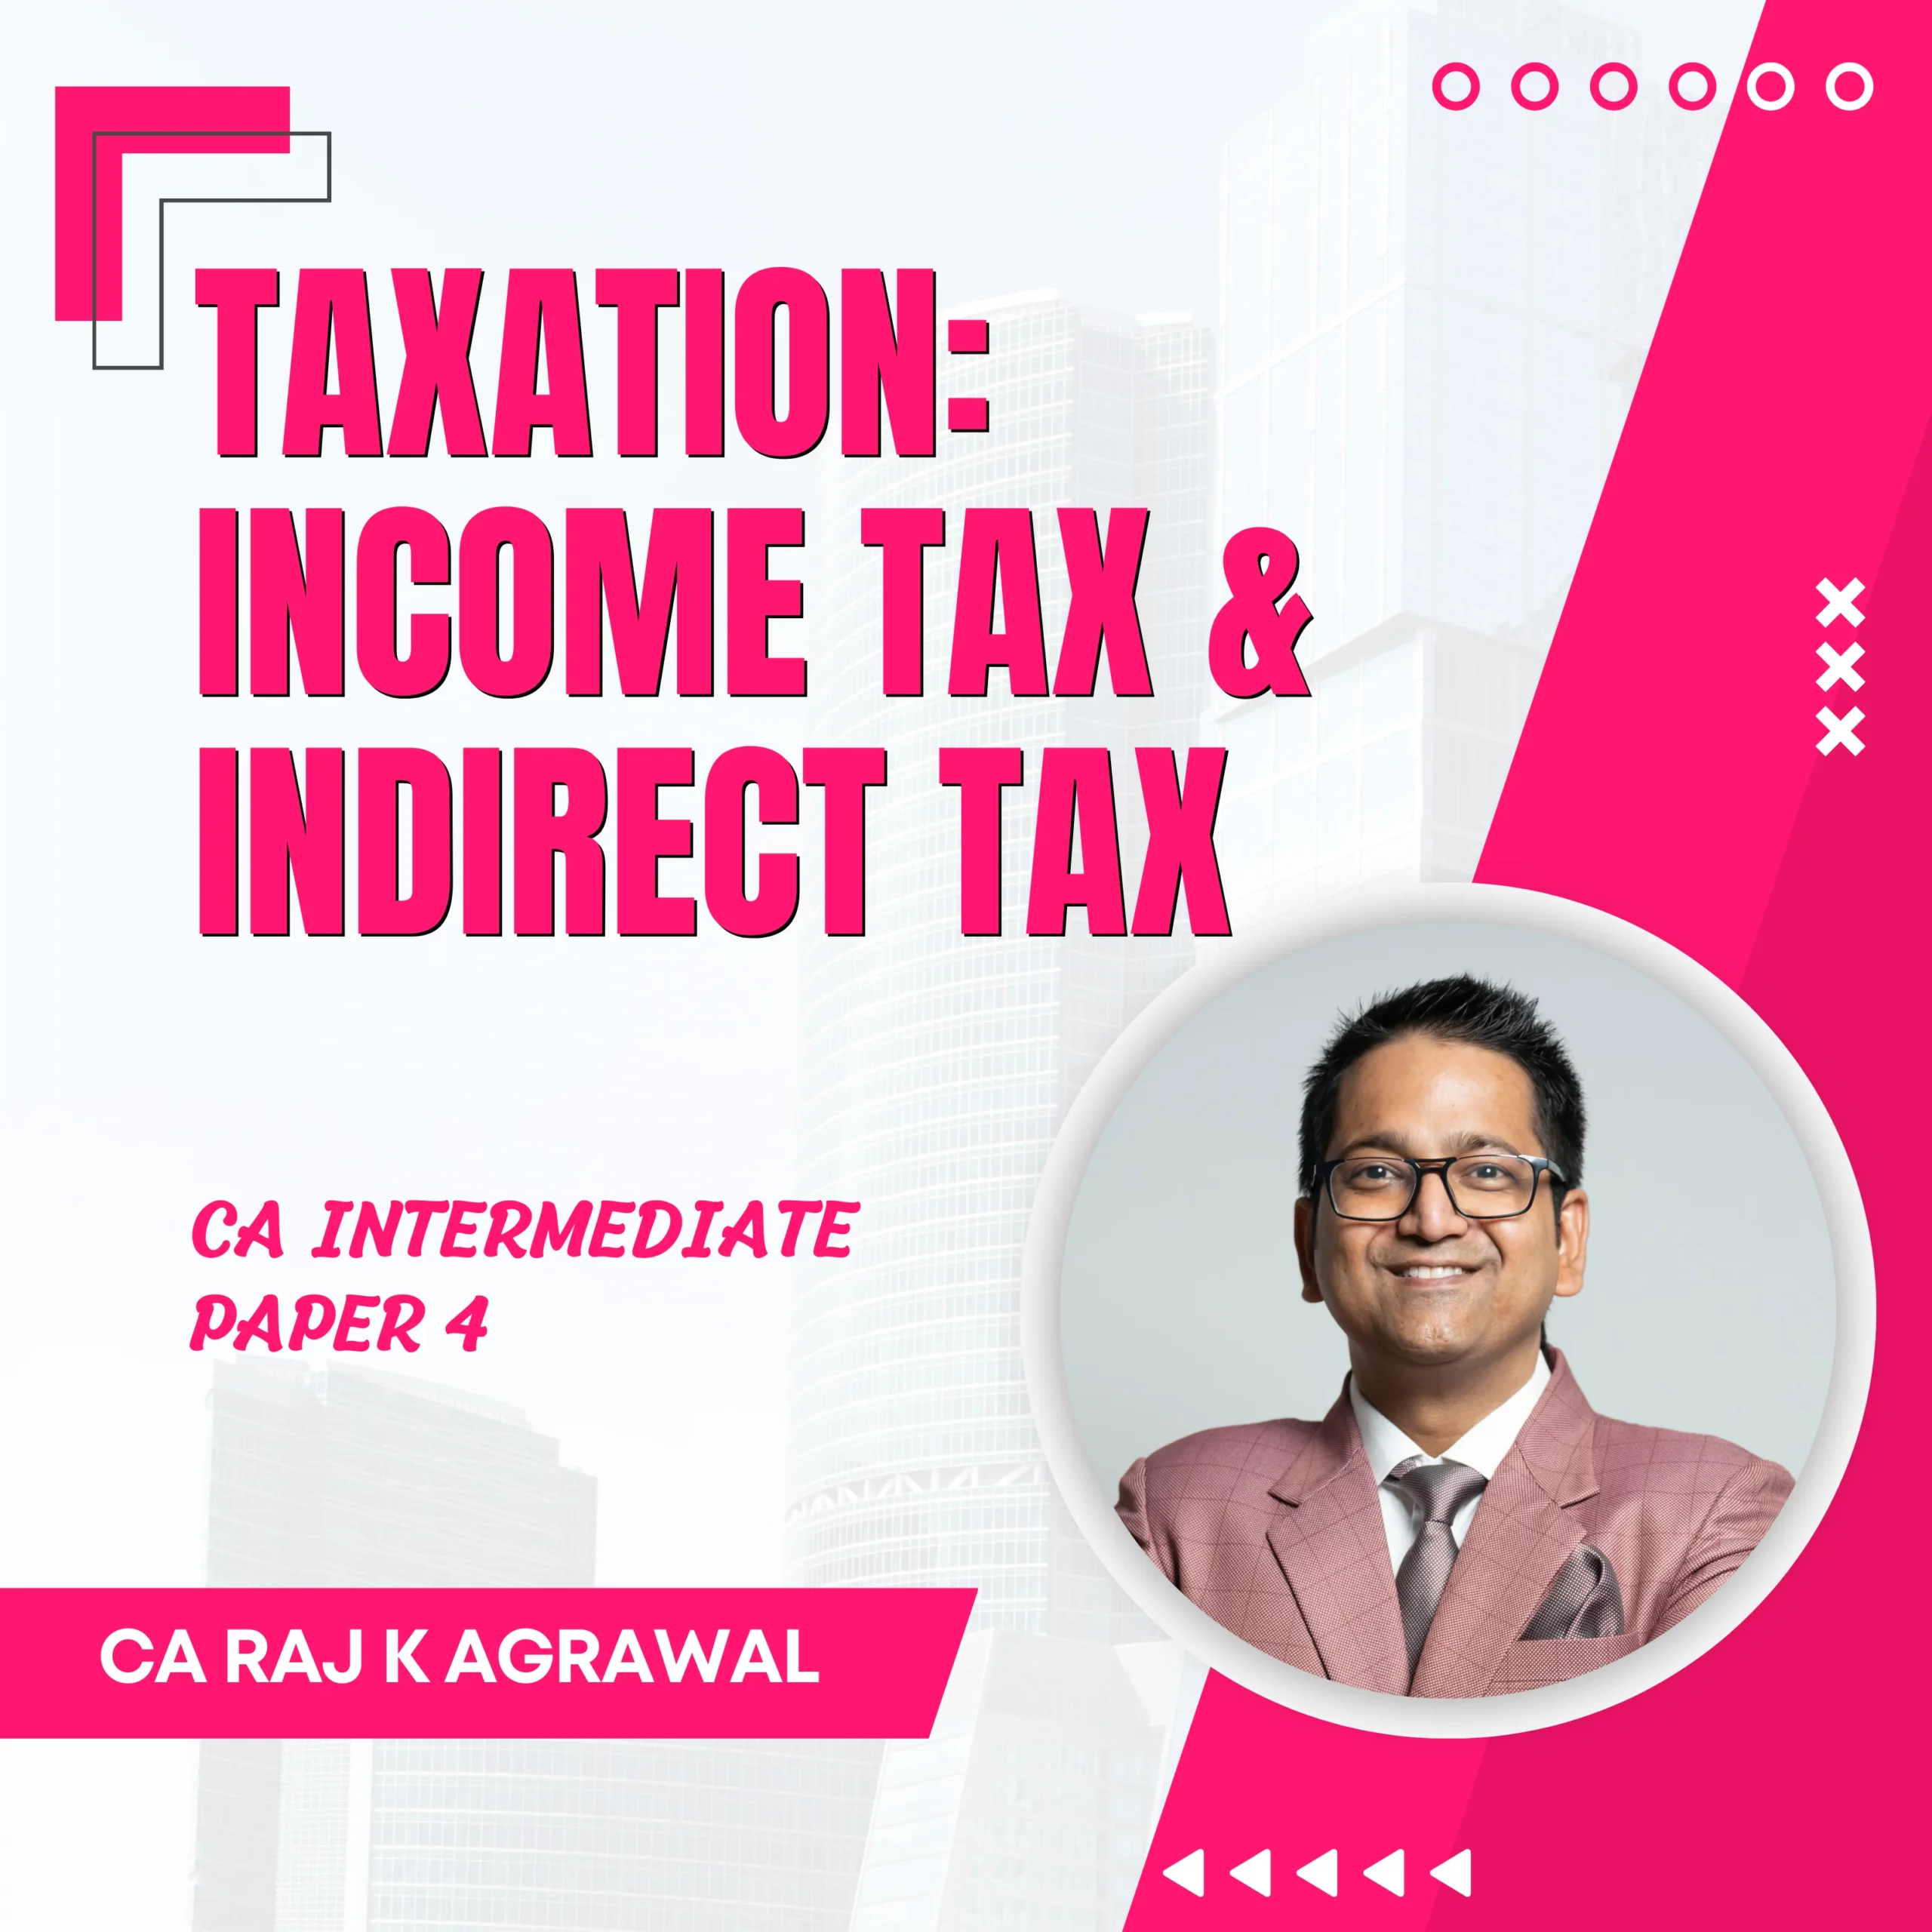 Taxation – Income Tax & Indirect Tax (CA Intermediate) - Paper 4